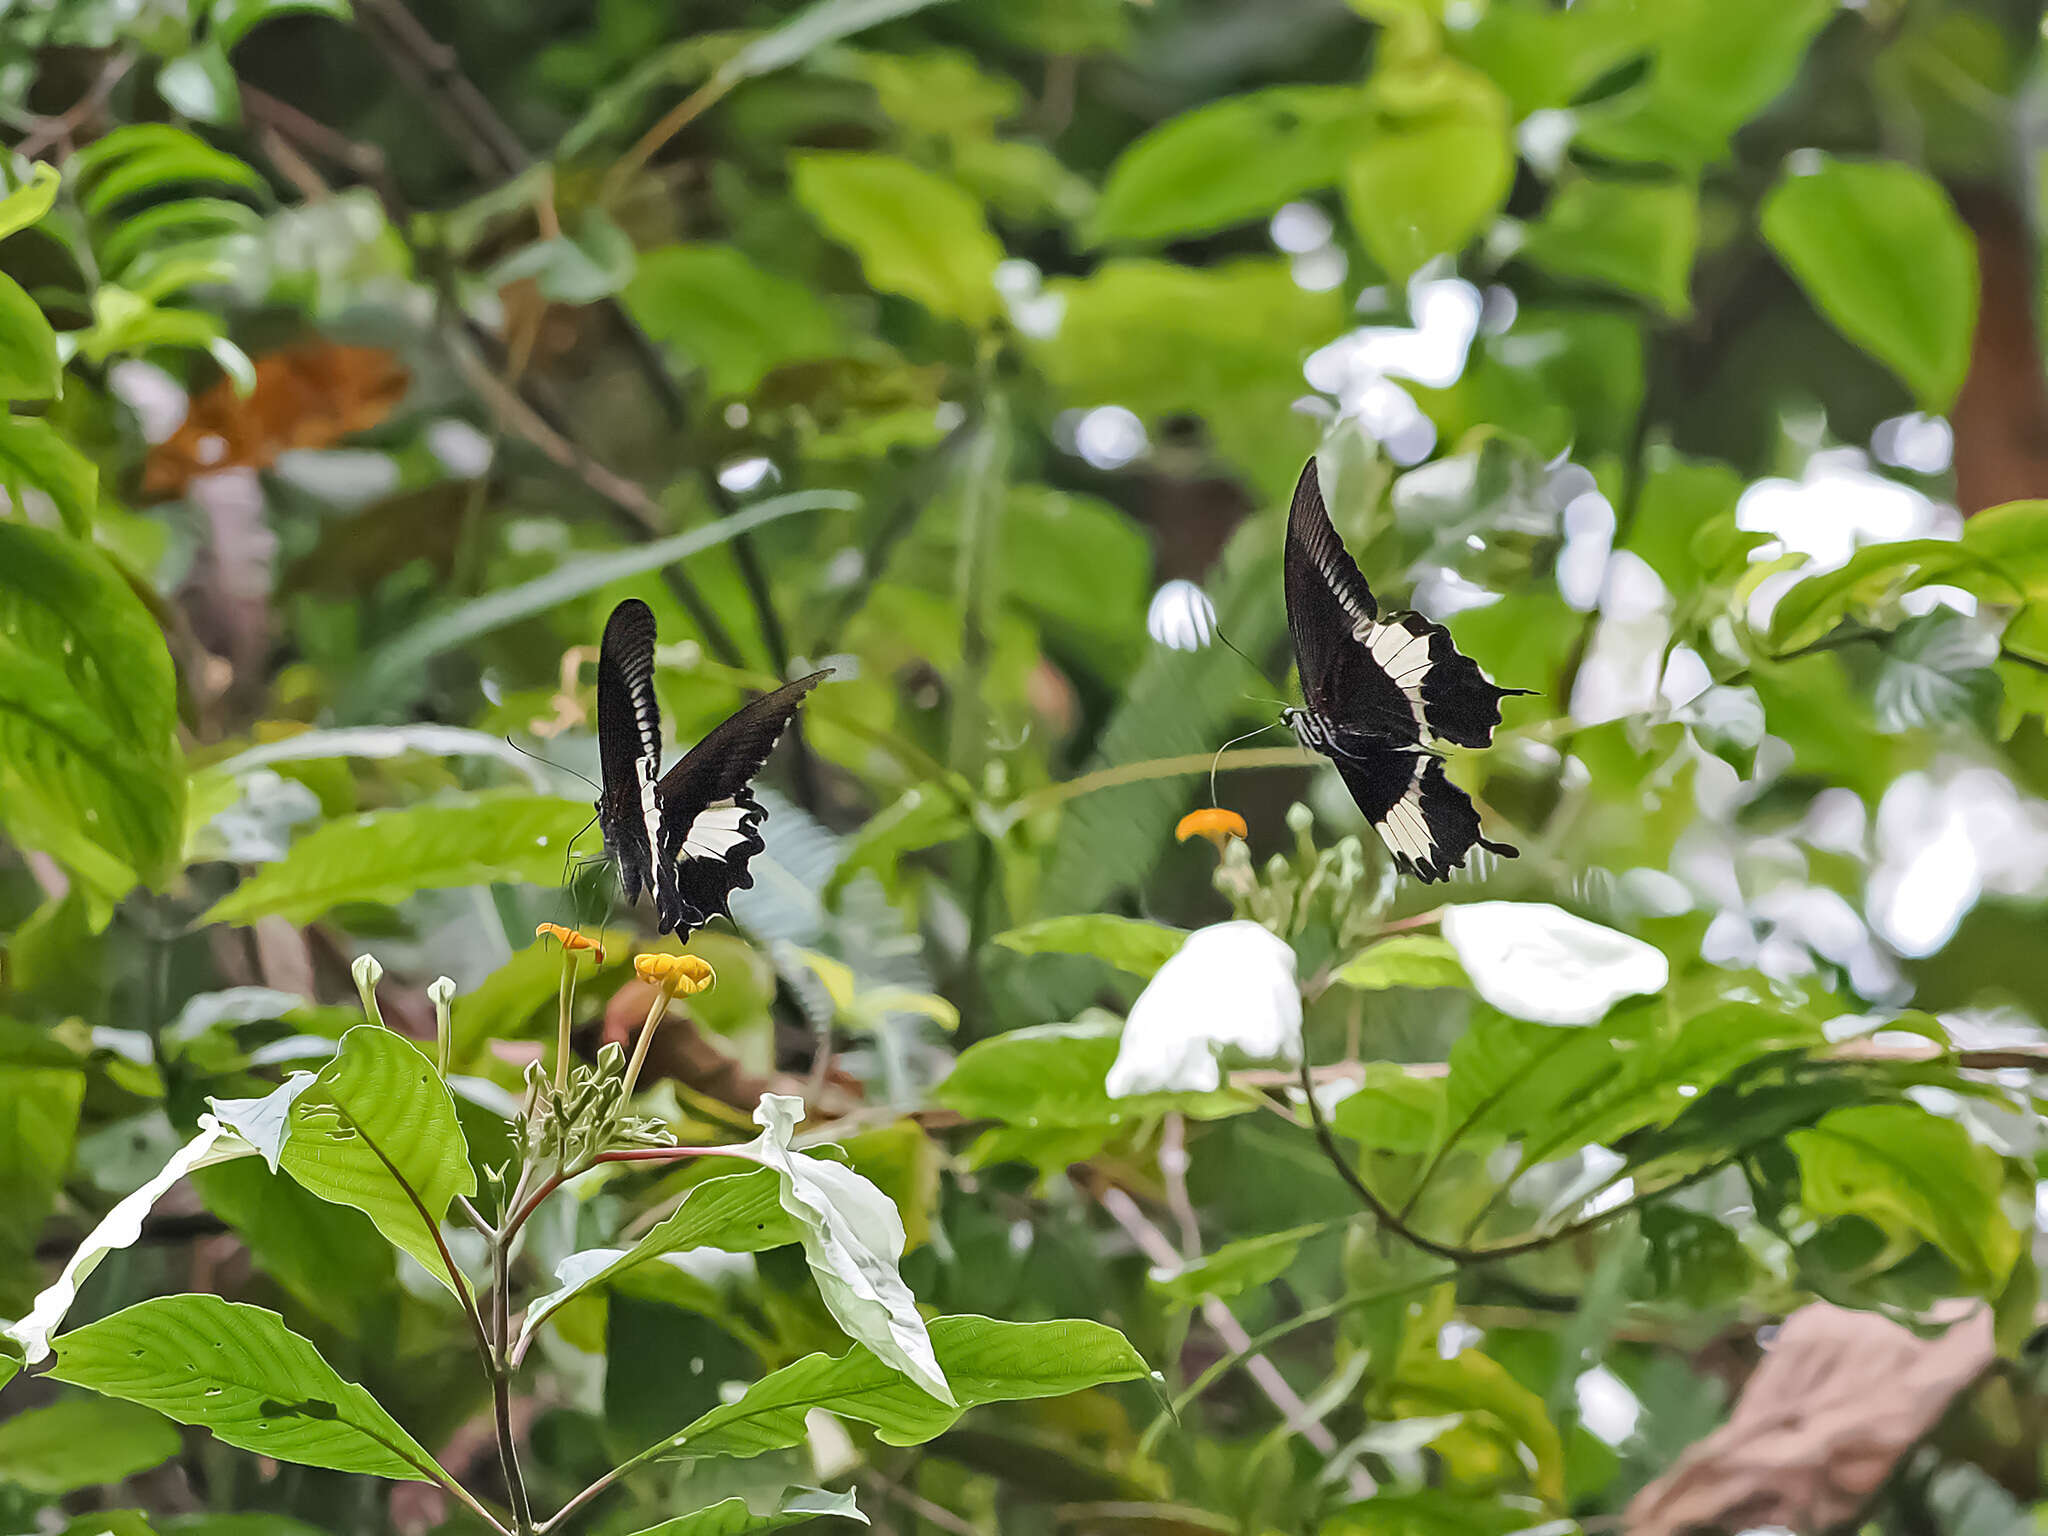 Image de Papilio diophantus Grose-Smith 1882